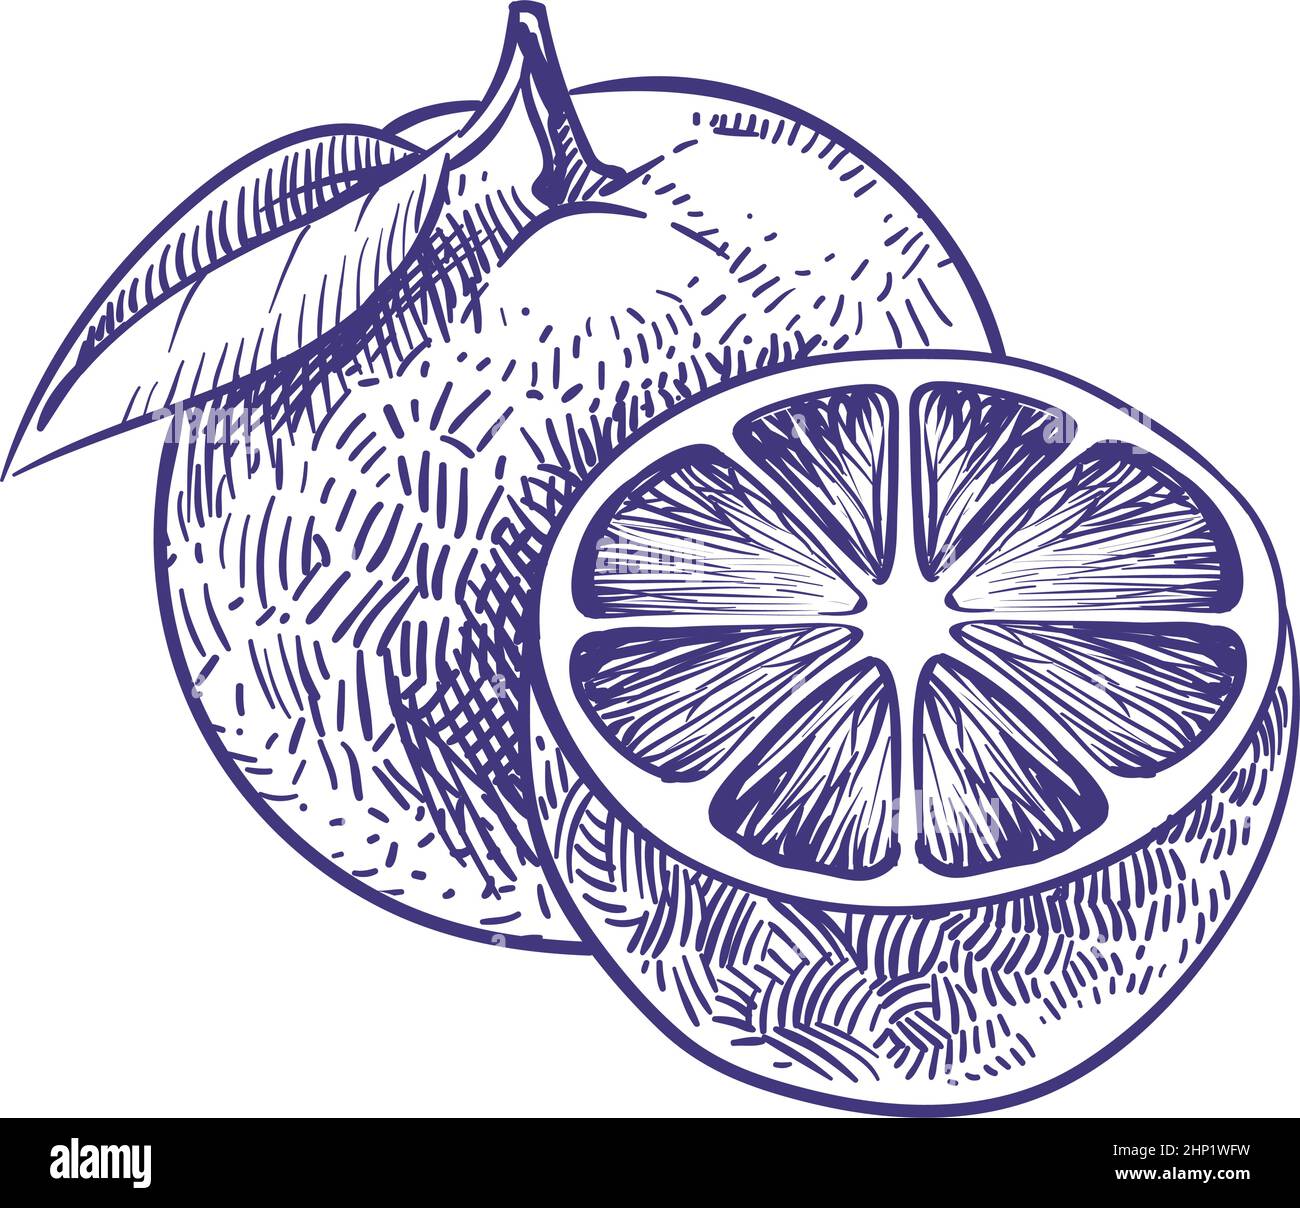 Orange citrus sliced fruit drawing free image download